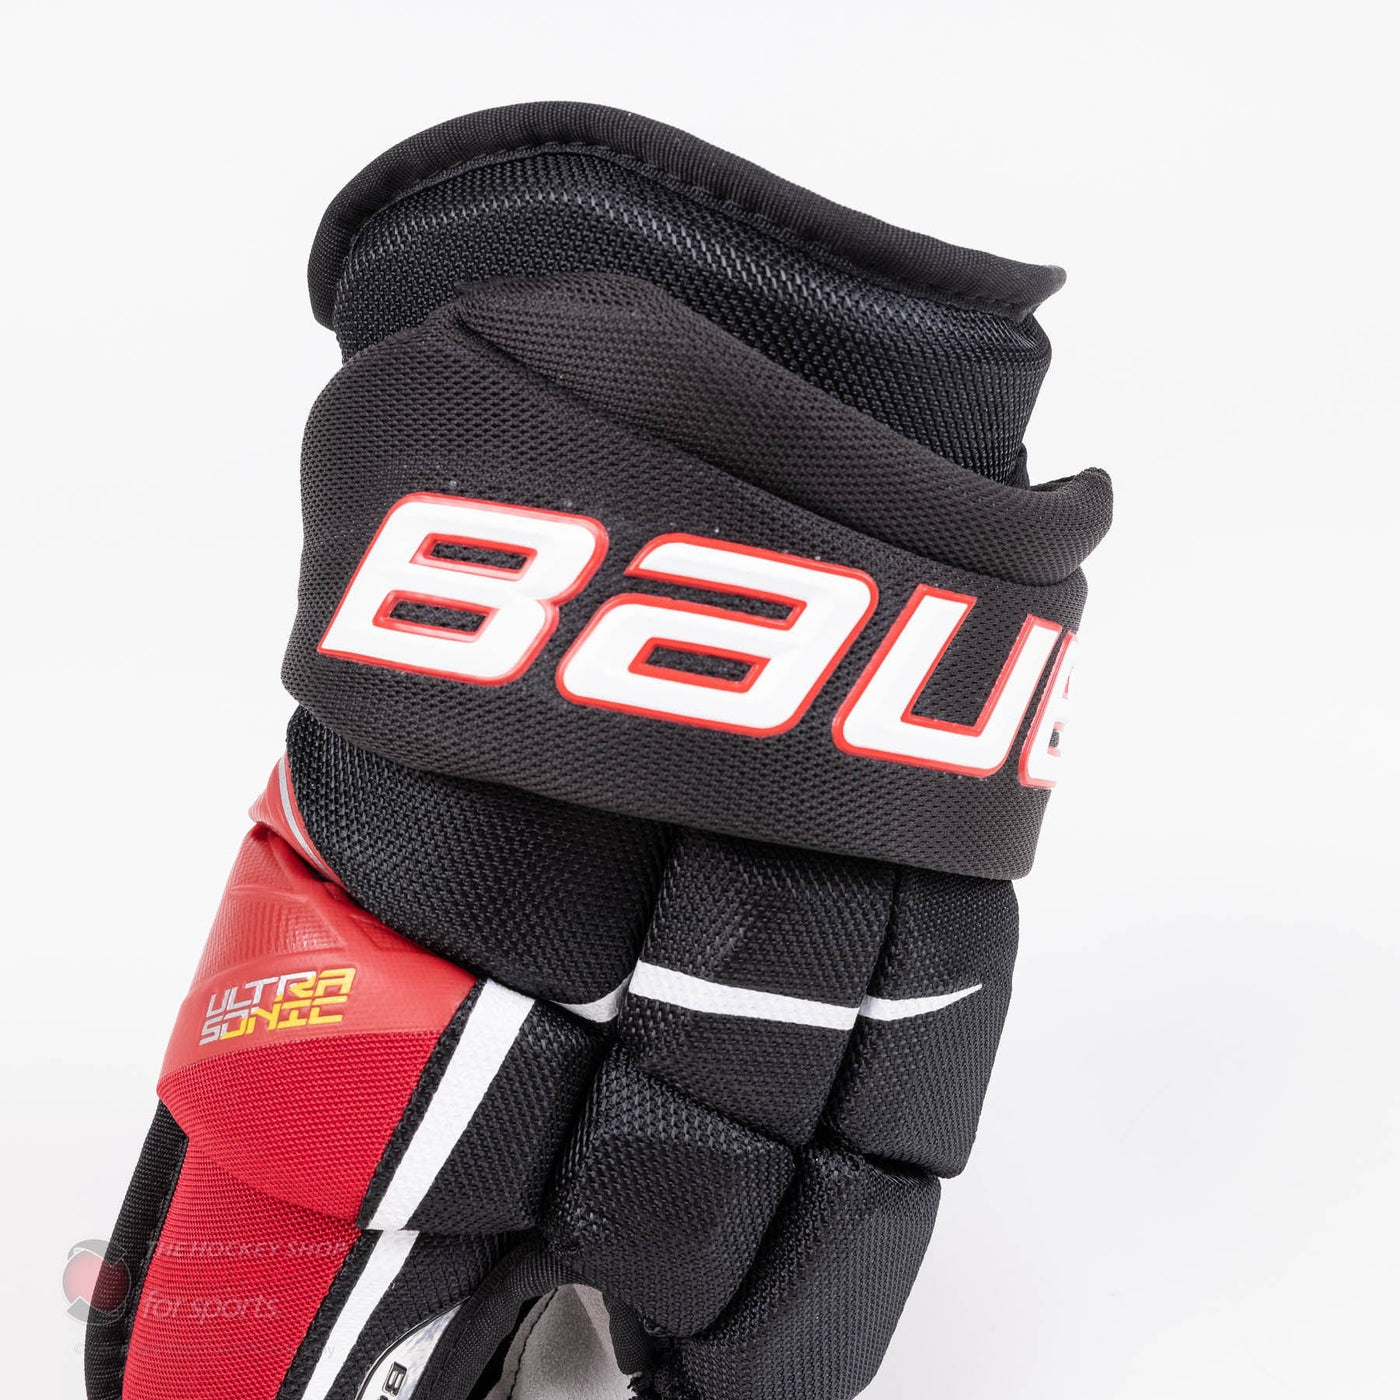 Bauer Supreme UltraSonic Senior Hockey Gloves